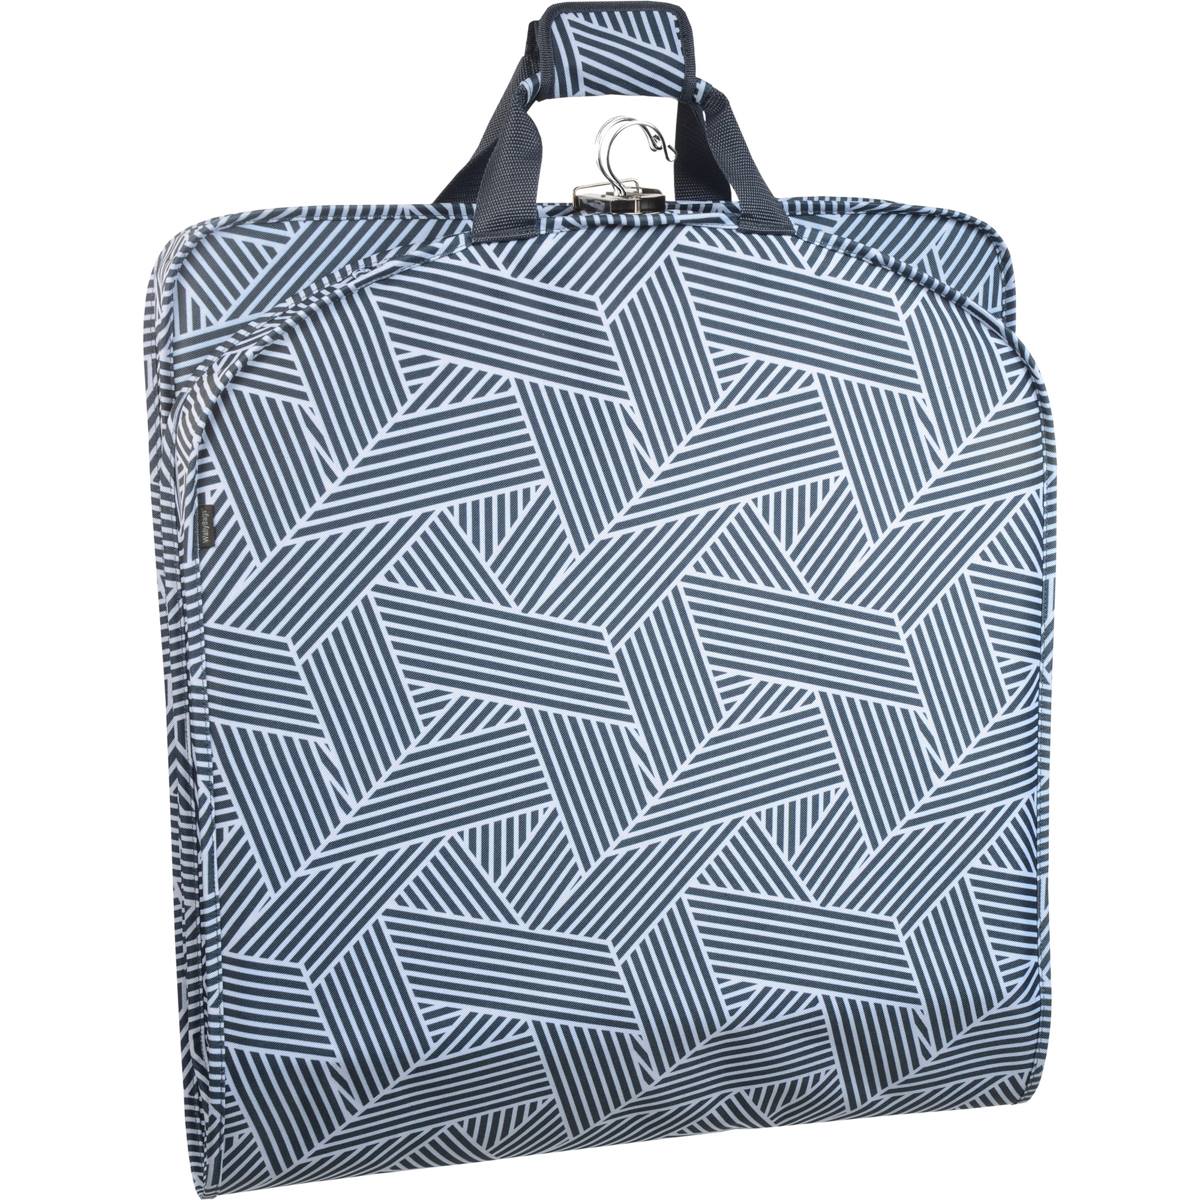 WallyBags(R) 52in. Deluxe Travel Crossroads Pattern Garment Bag